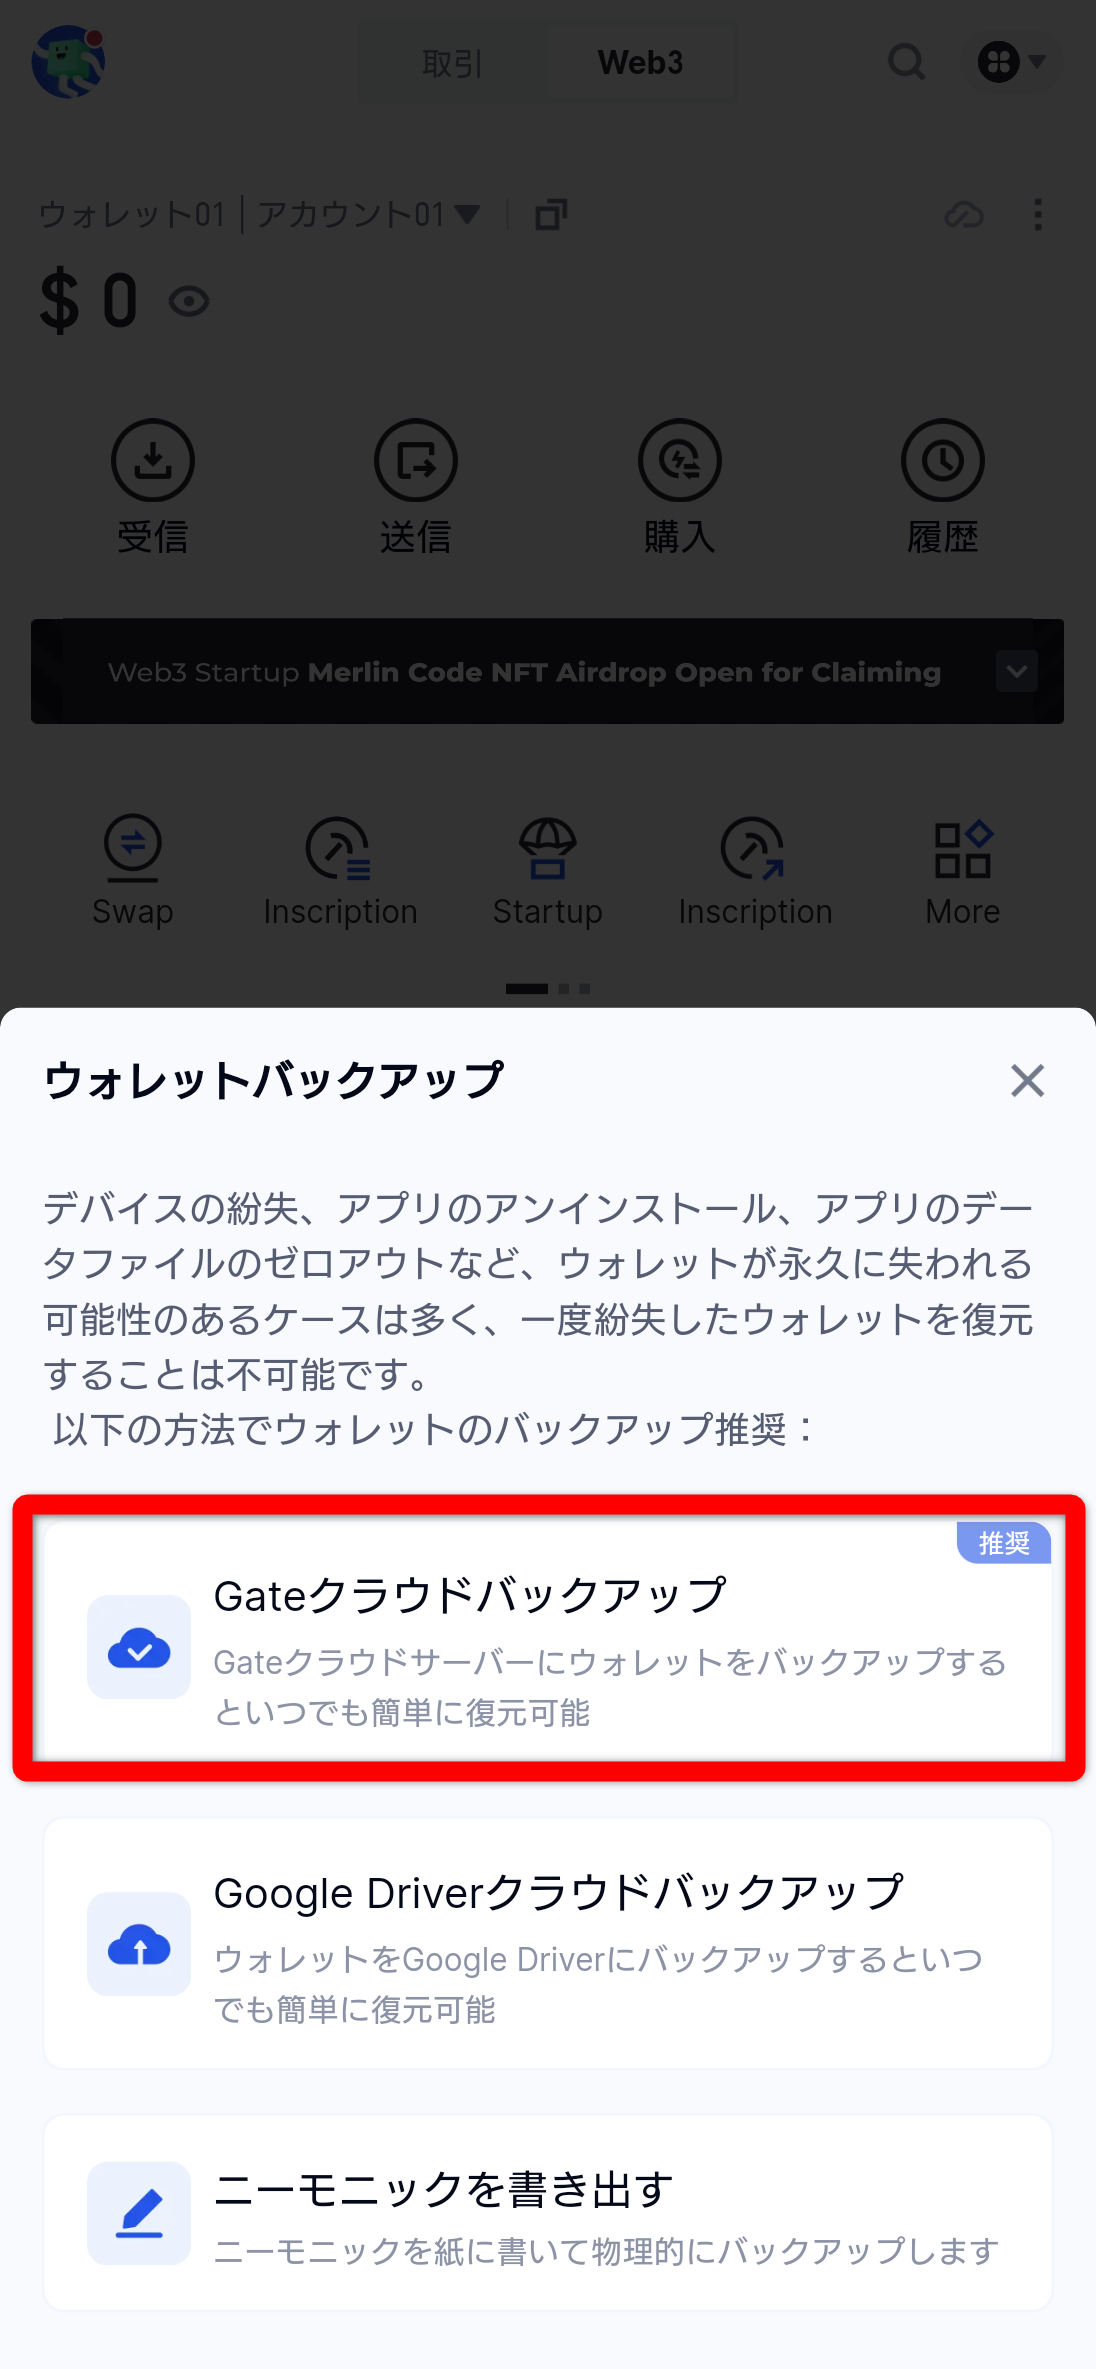 Gate.io web3 エアドロップ獲得方法